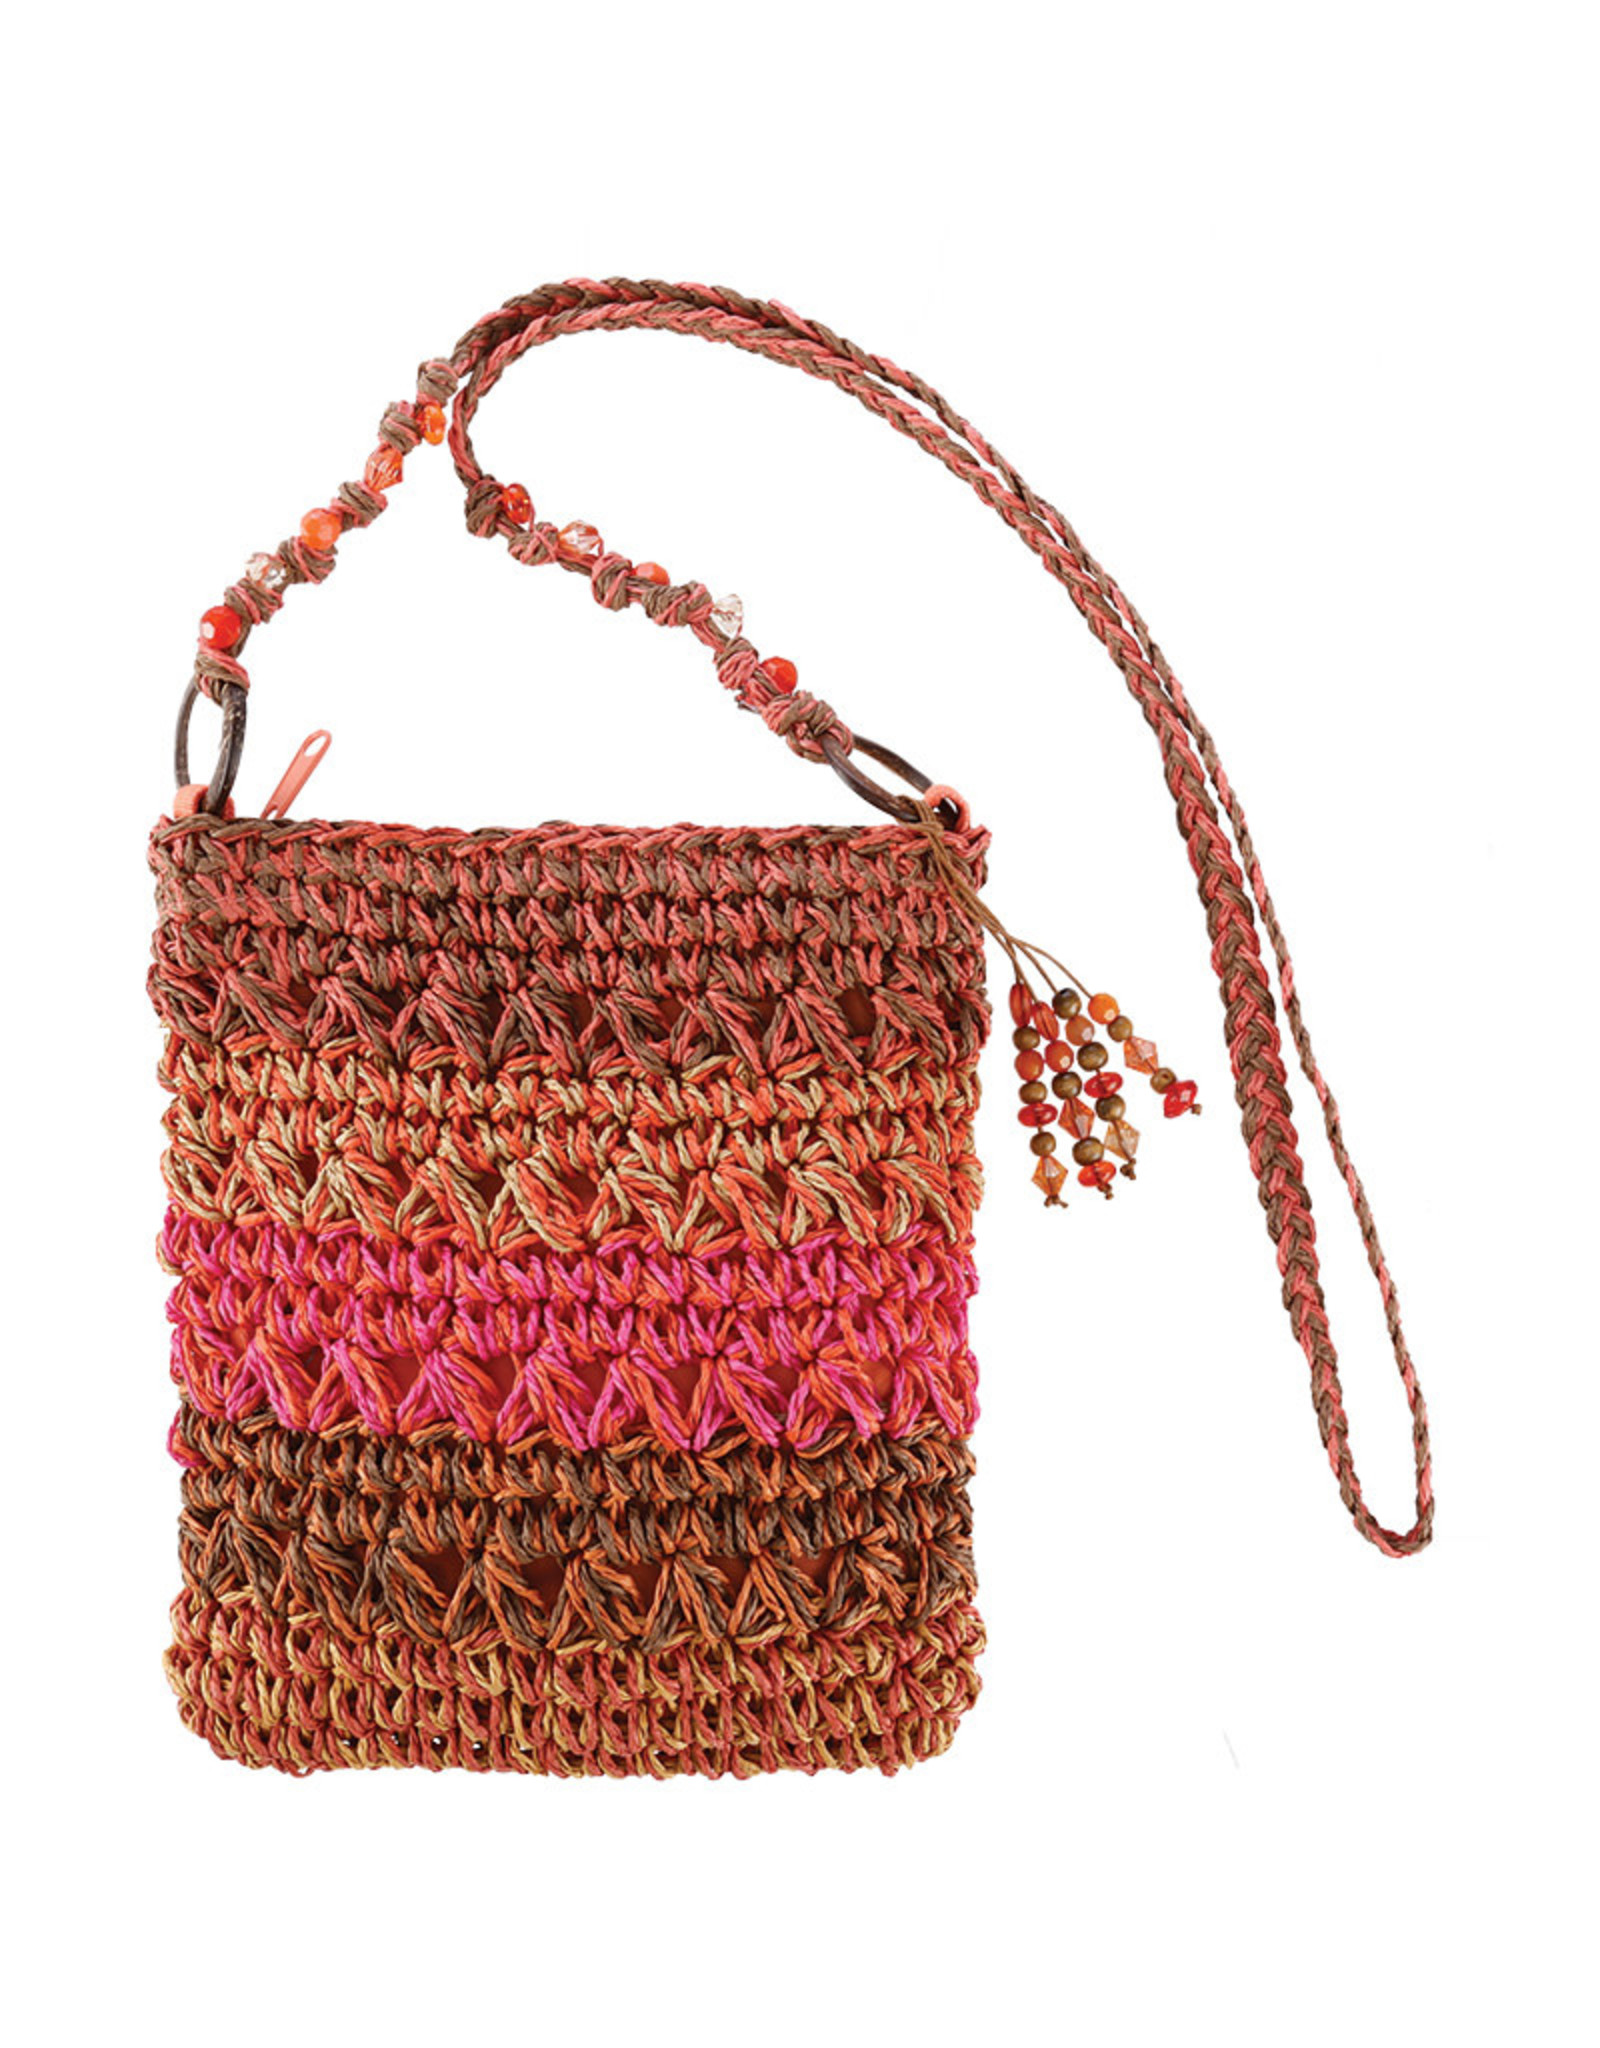 Colorful Straw Handbags